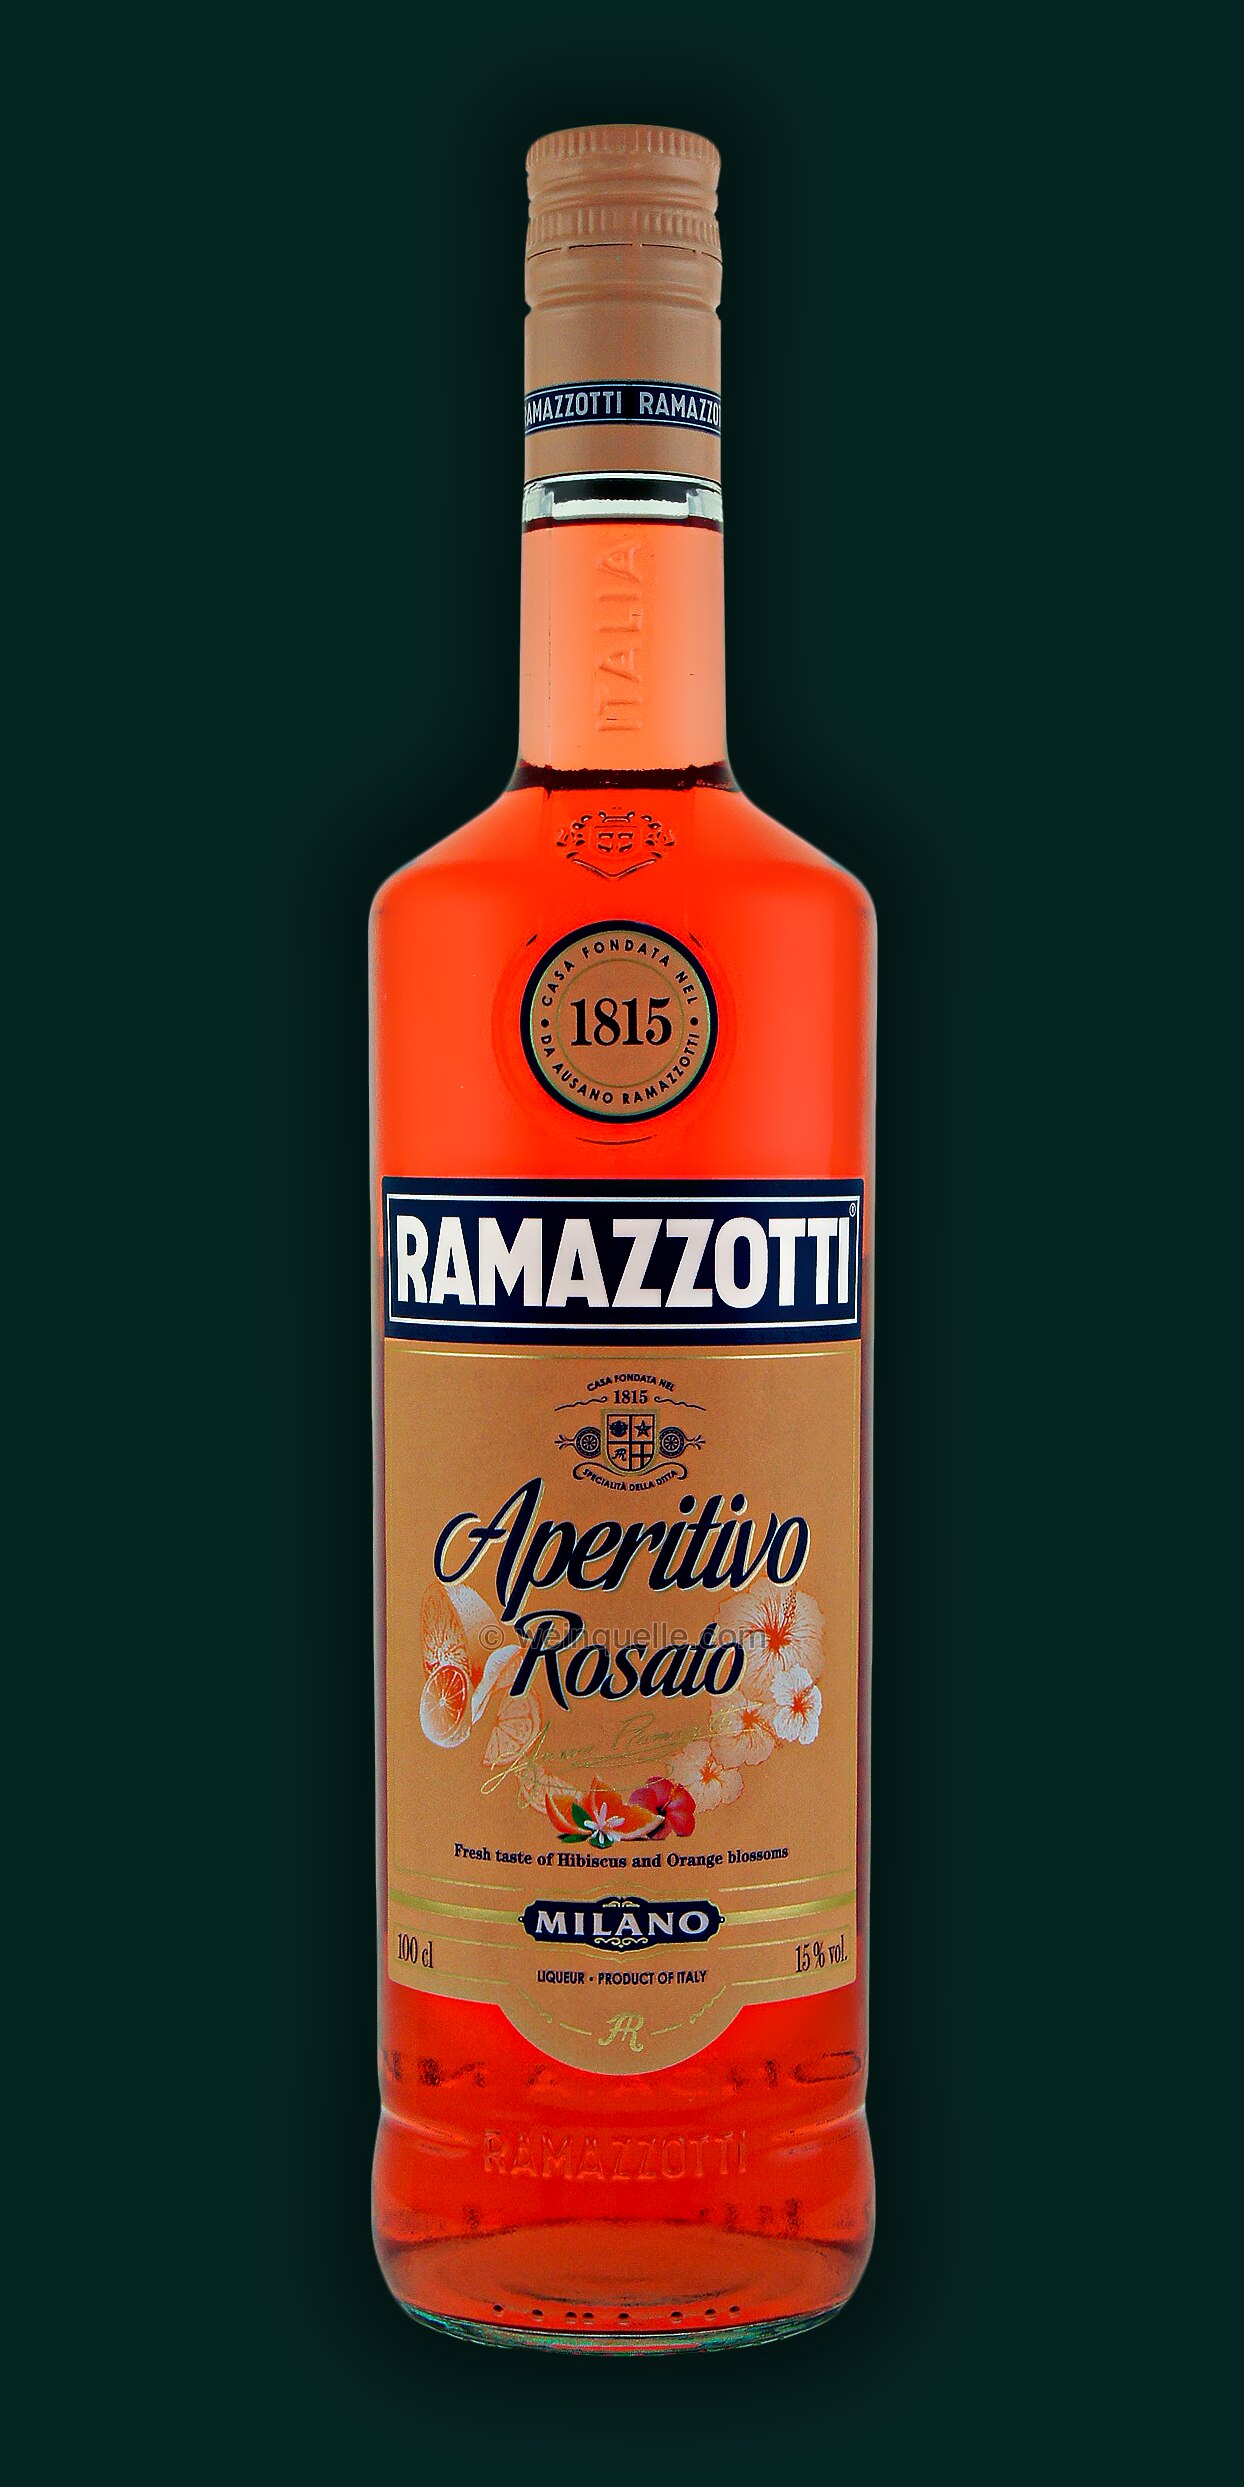 Weinquelle Rosato 1,0 - Ramazzotti Lühmann Aperitivo Liter